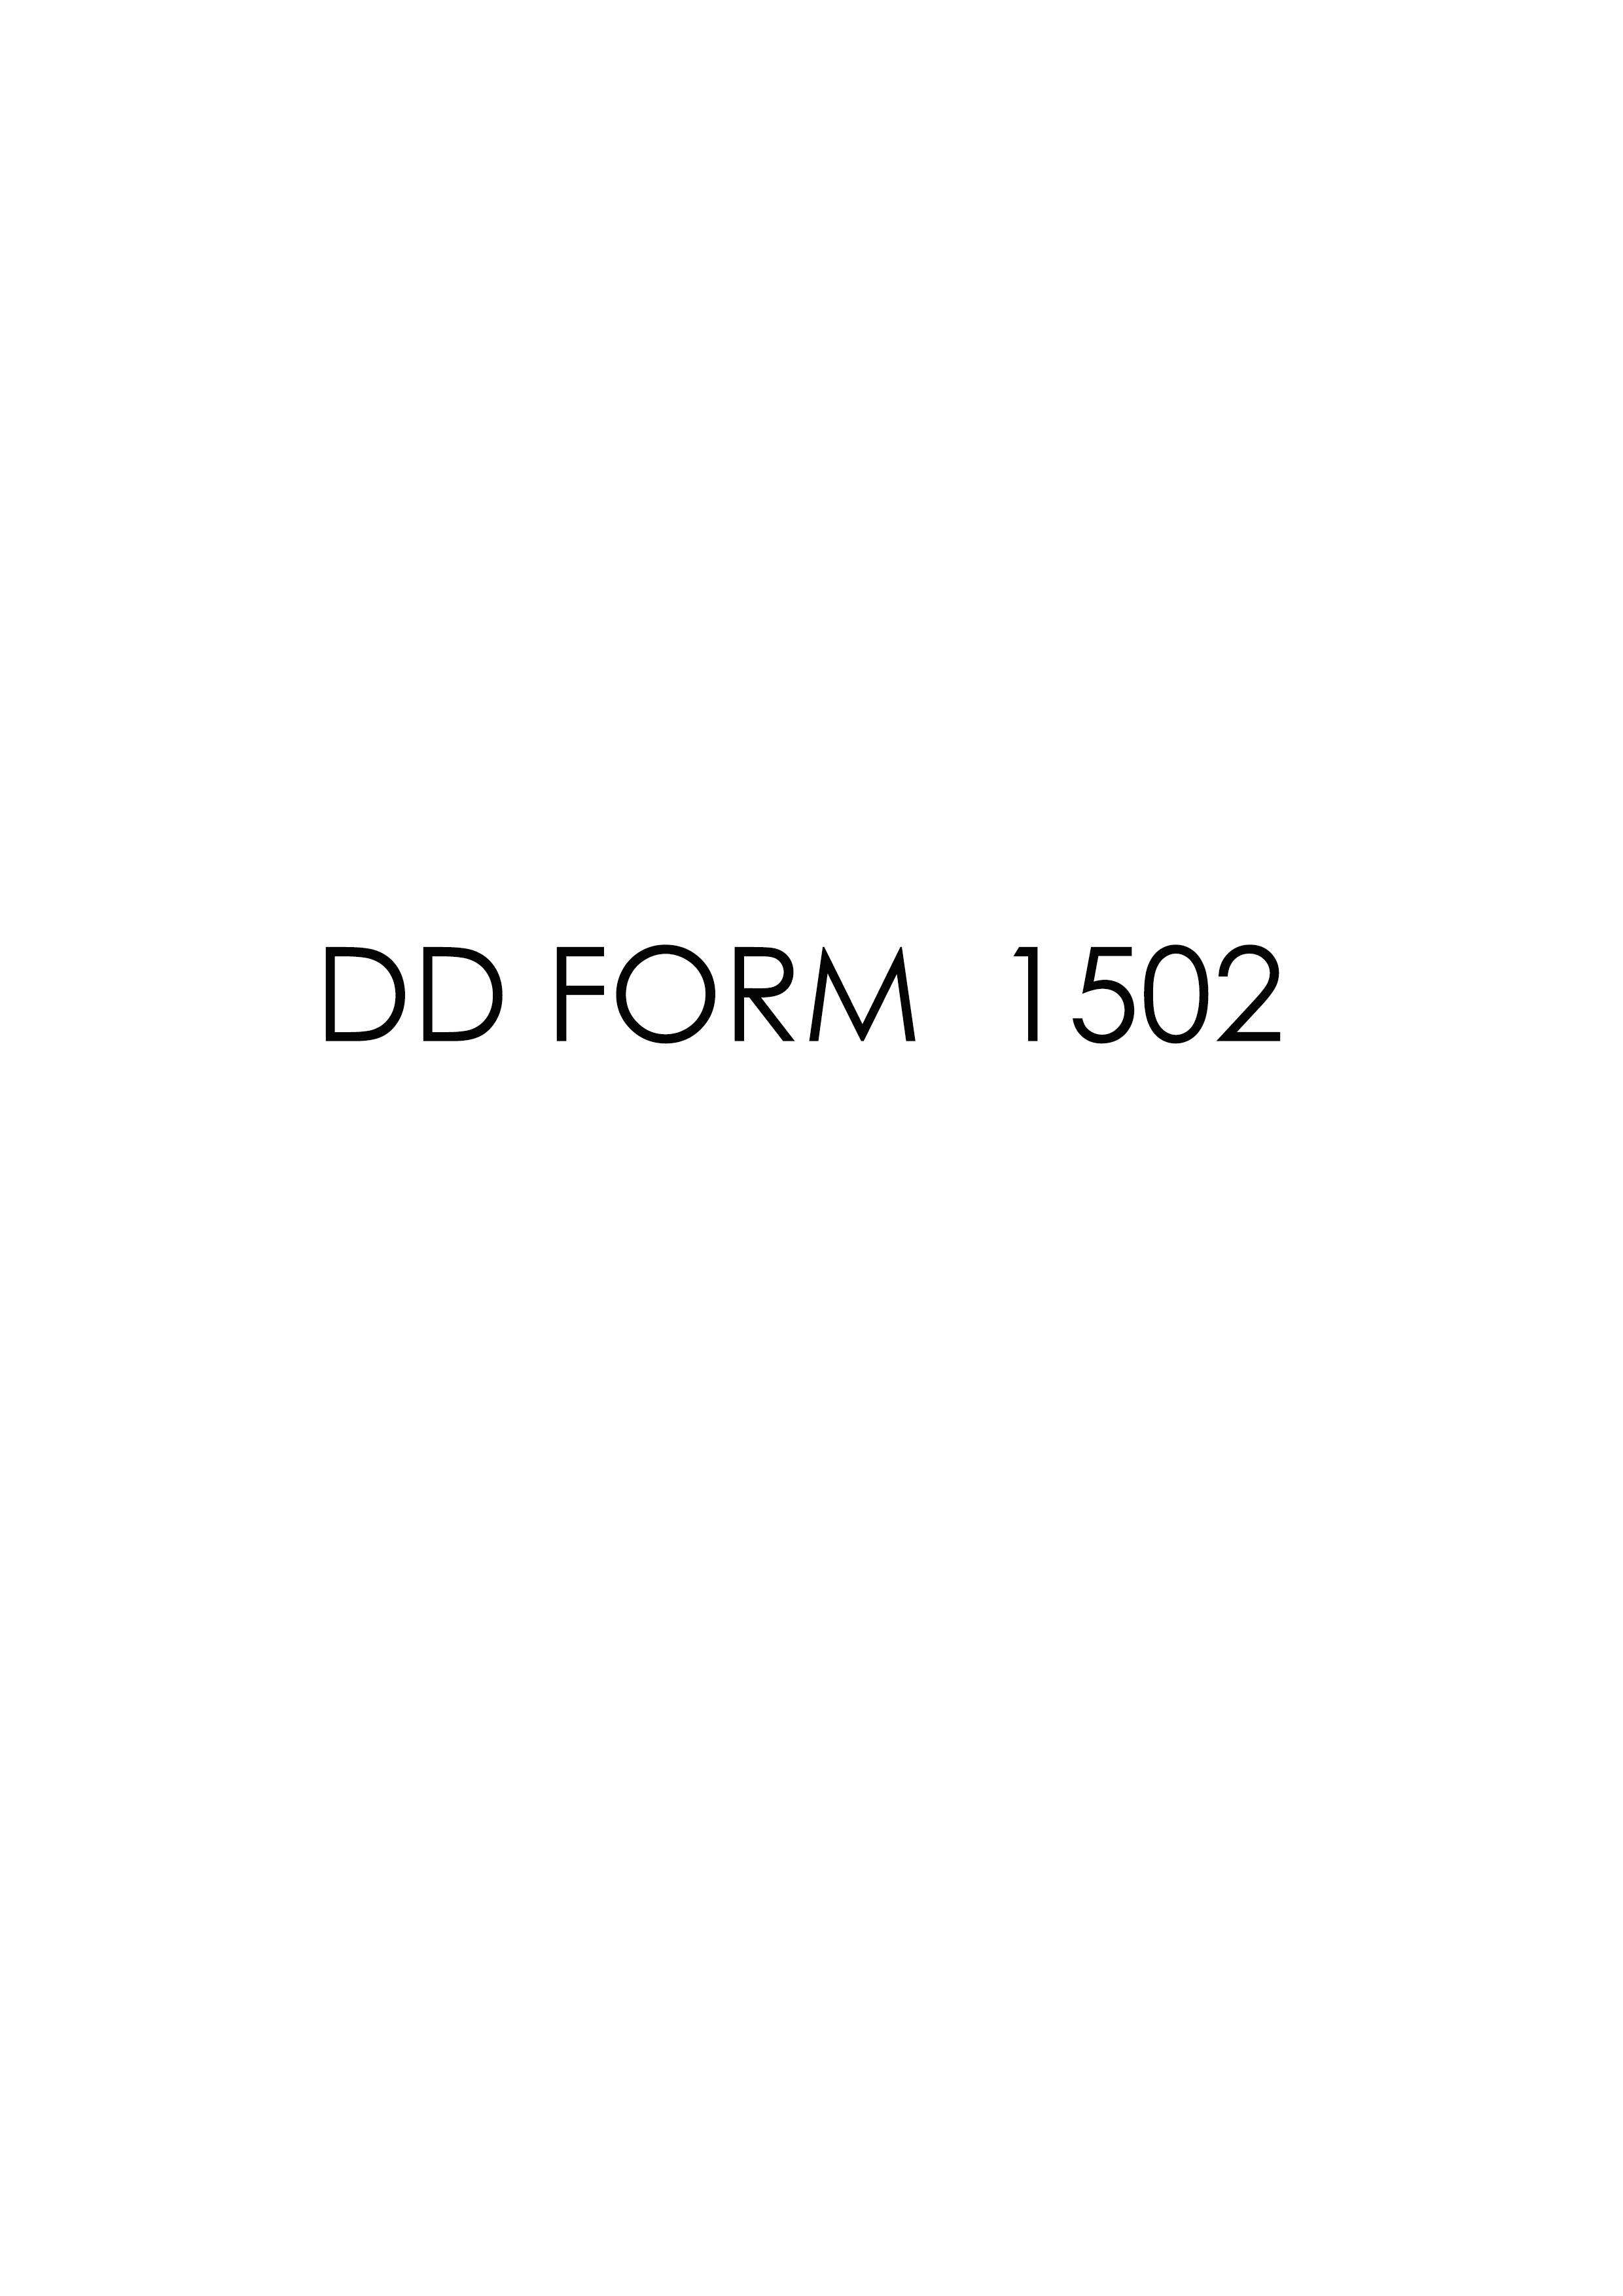 Download dd 1502 Form